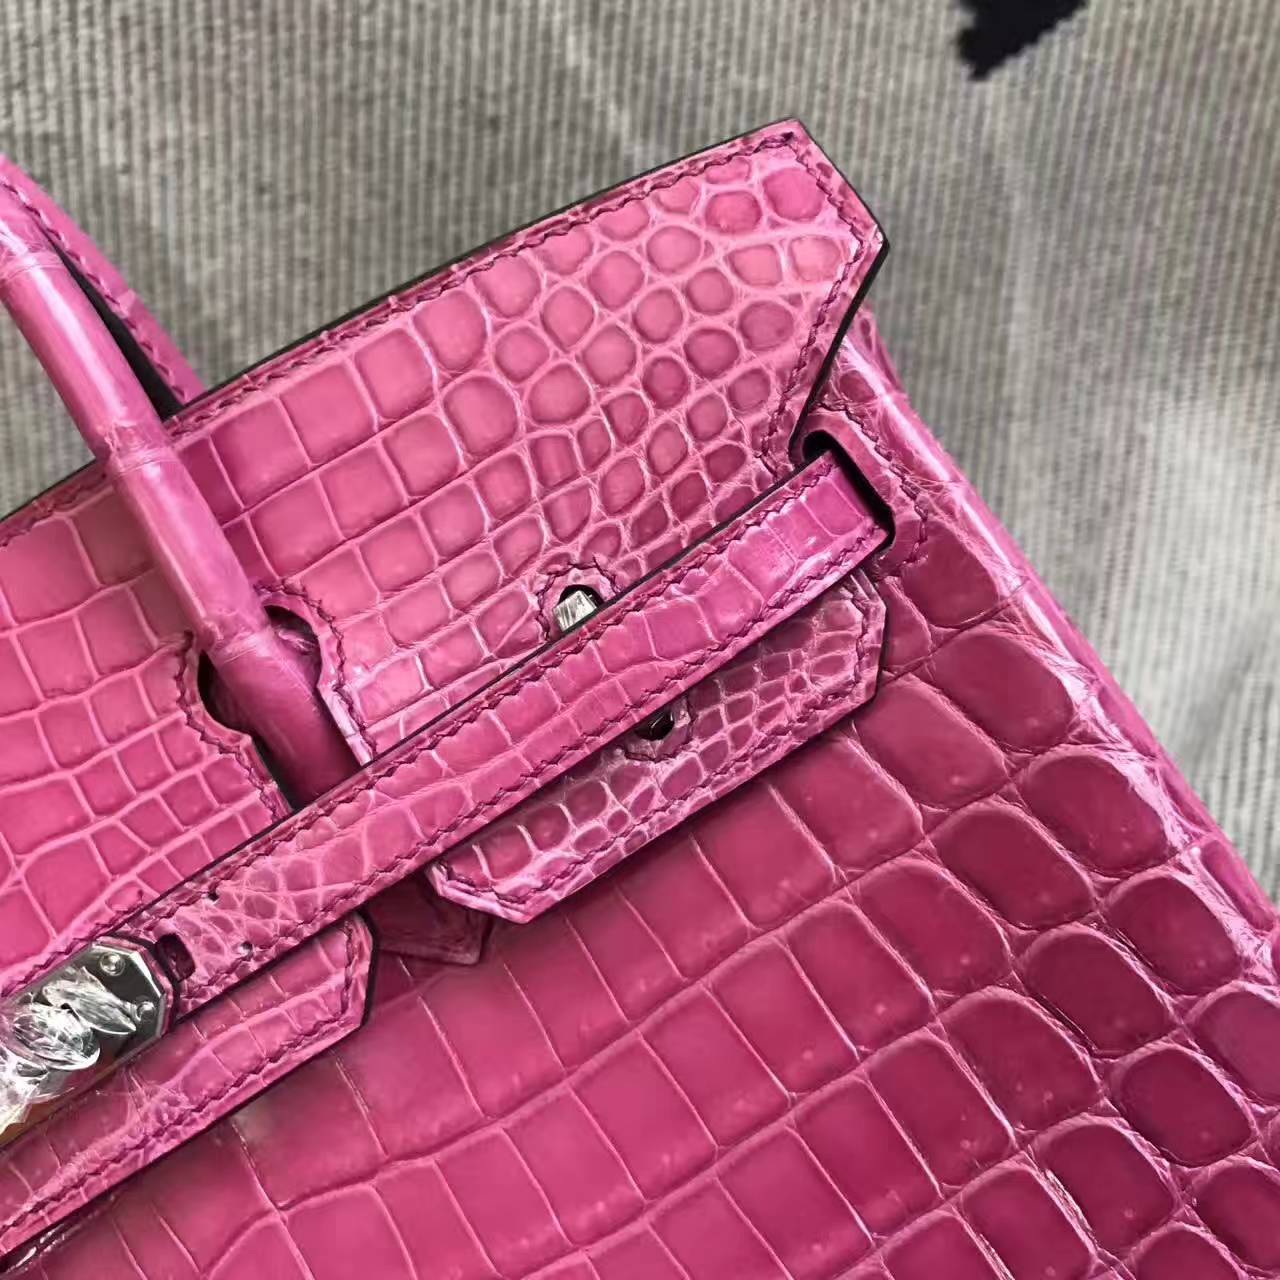 Luxury Hermes Shiny Crocodile Leather Birkin Bag 25cm in 5E Hot Pink ...